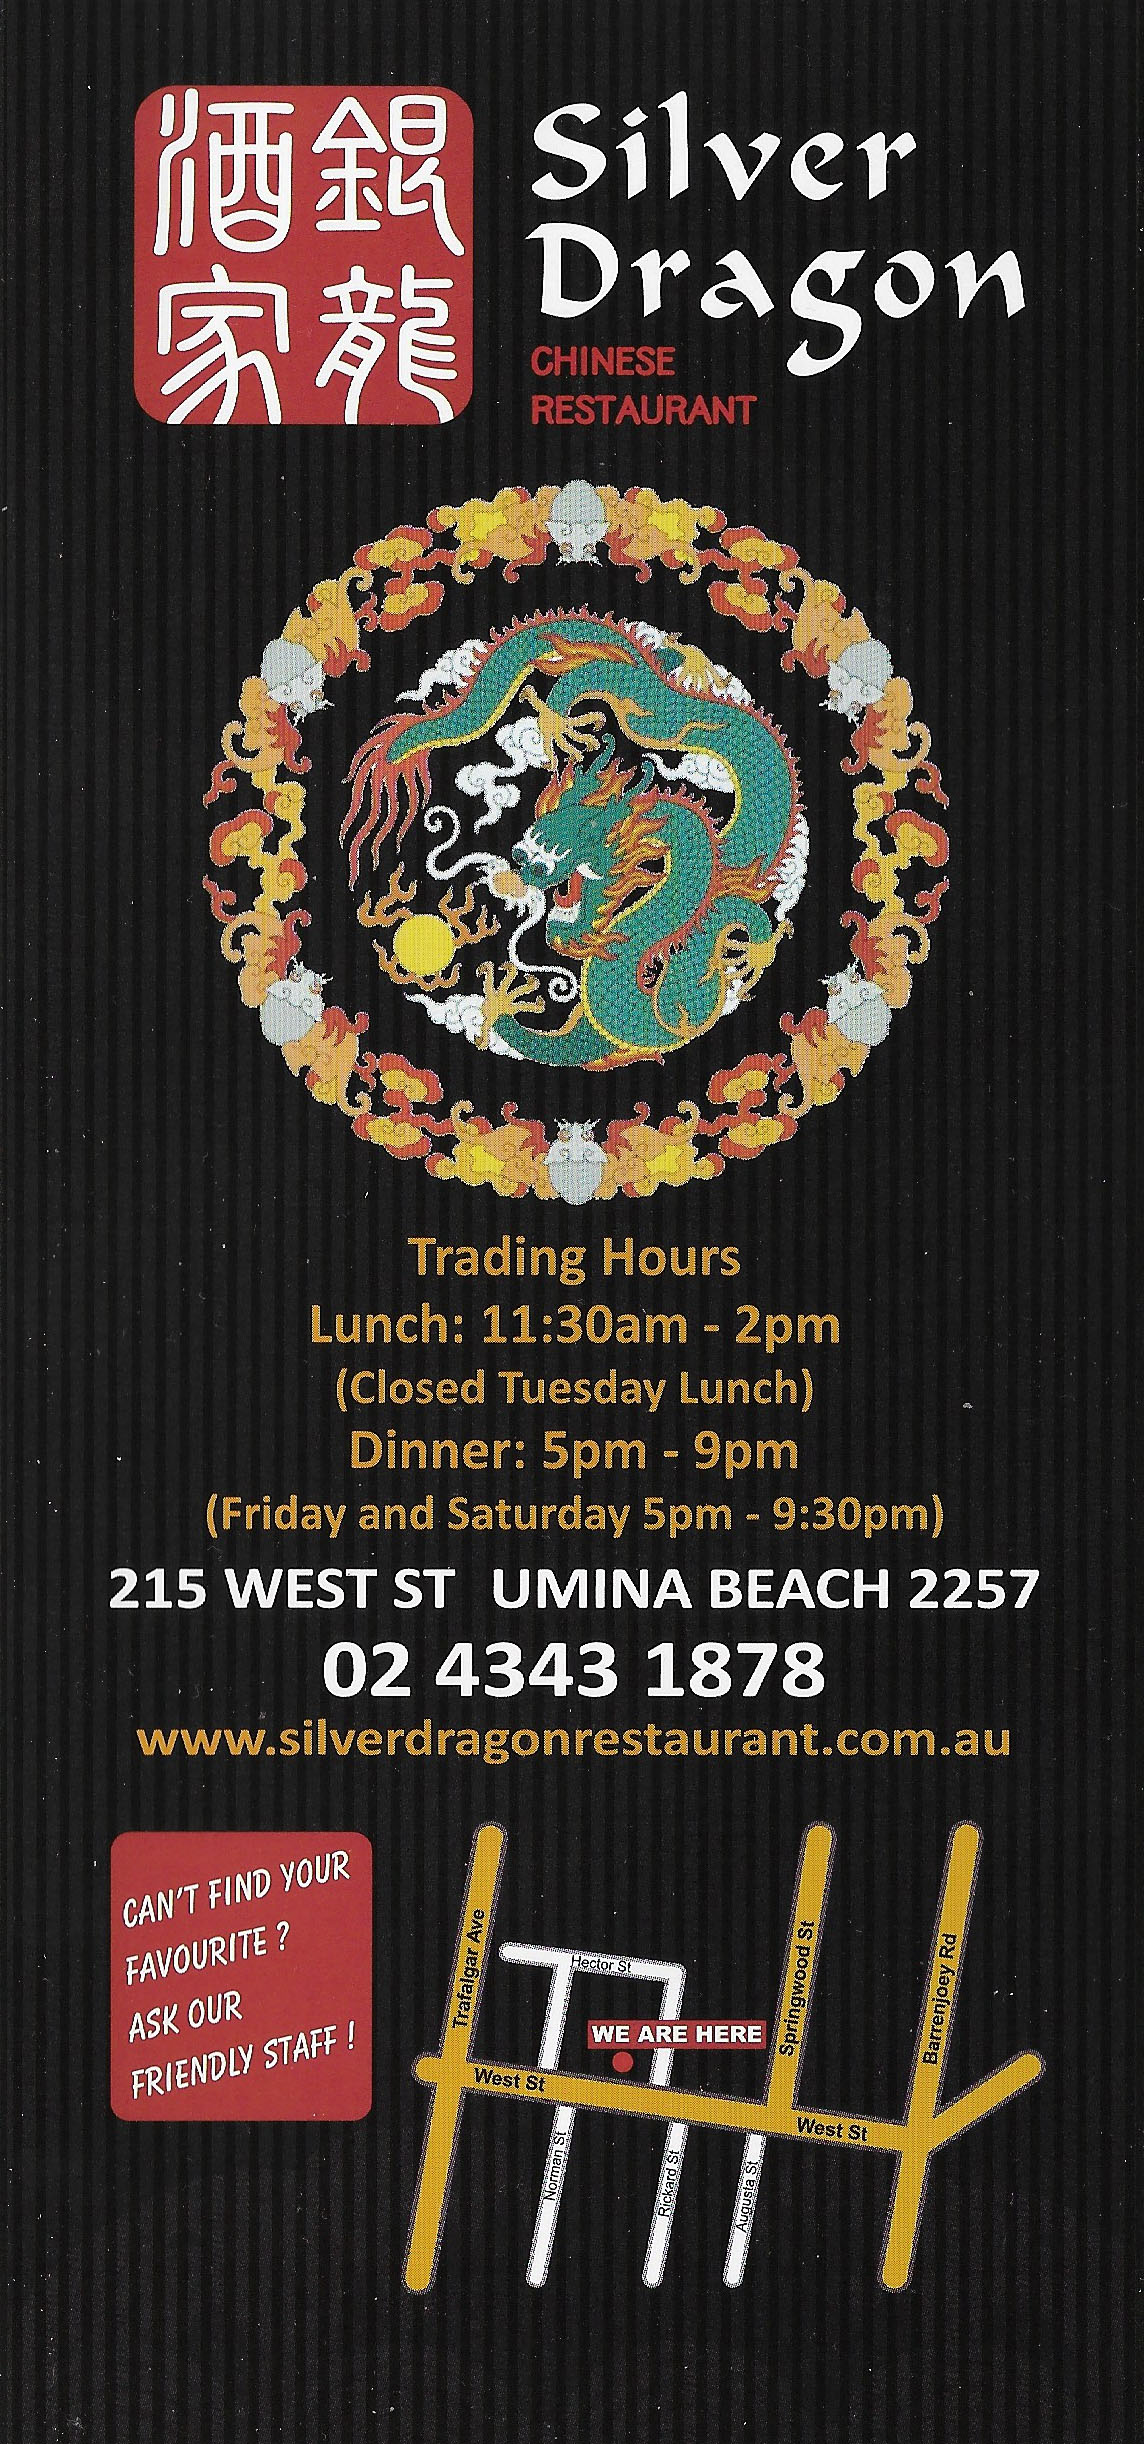 Silver Dragon Chinese Restaurant Umina Beach Central Coast - NSW | OBZ Online Business Zone